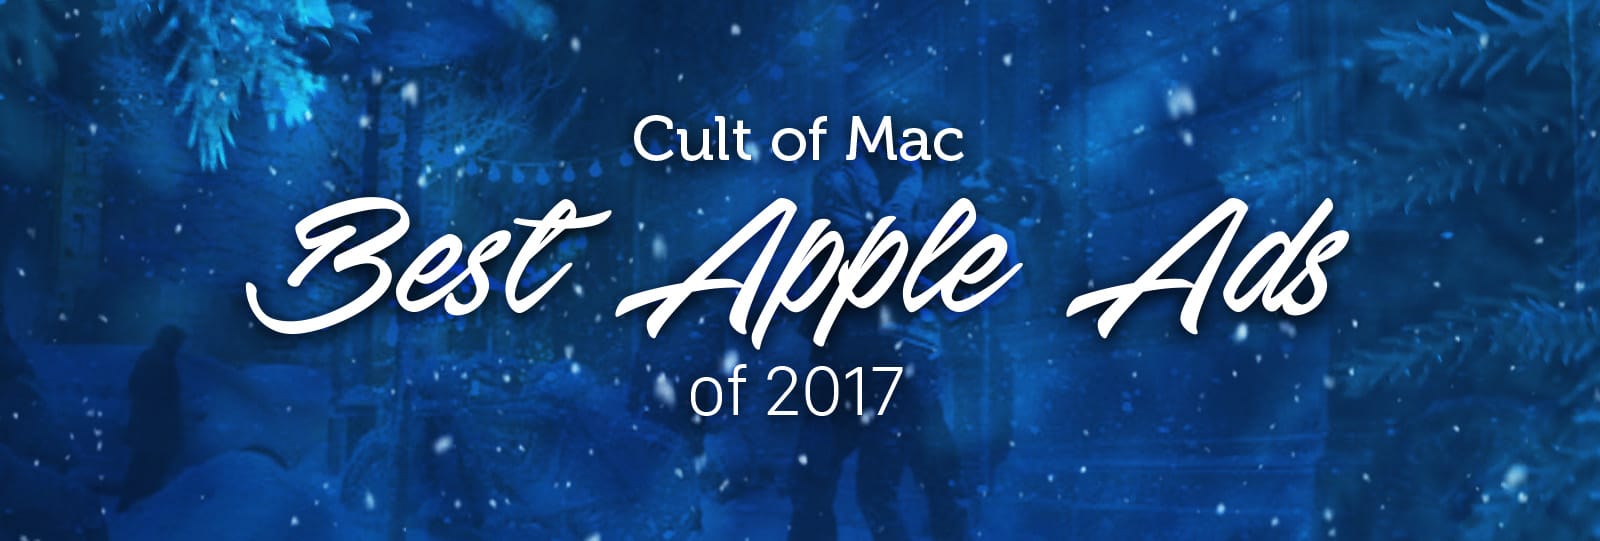 Best Apple ads of 2017